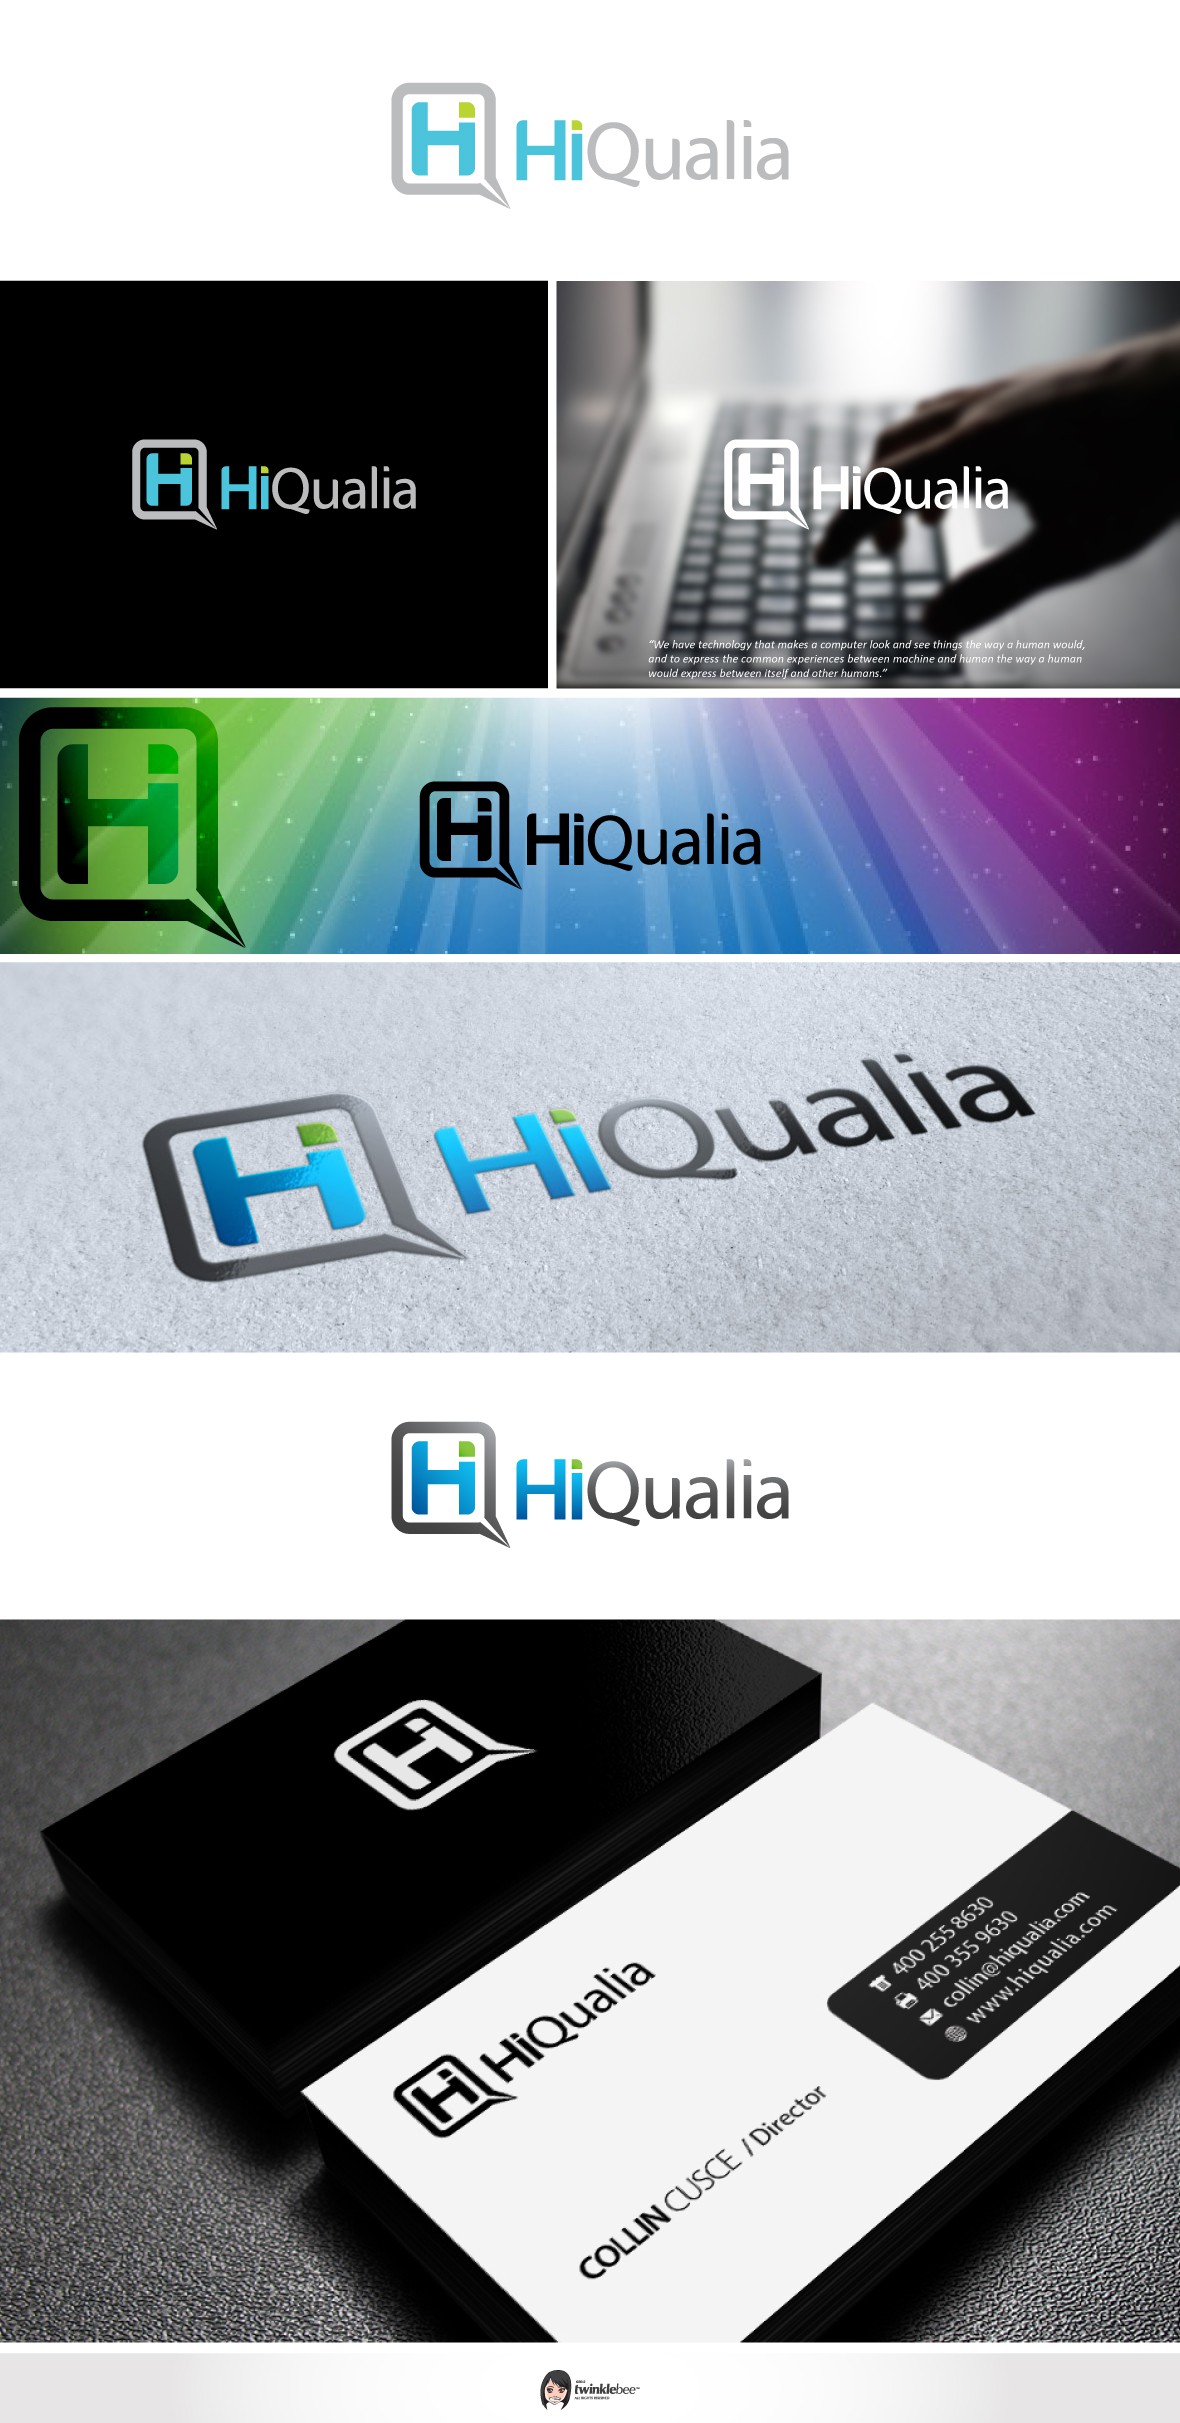 HiQualia需要一个新标志